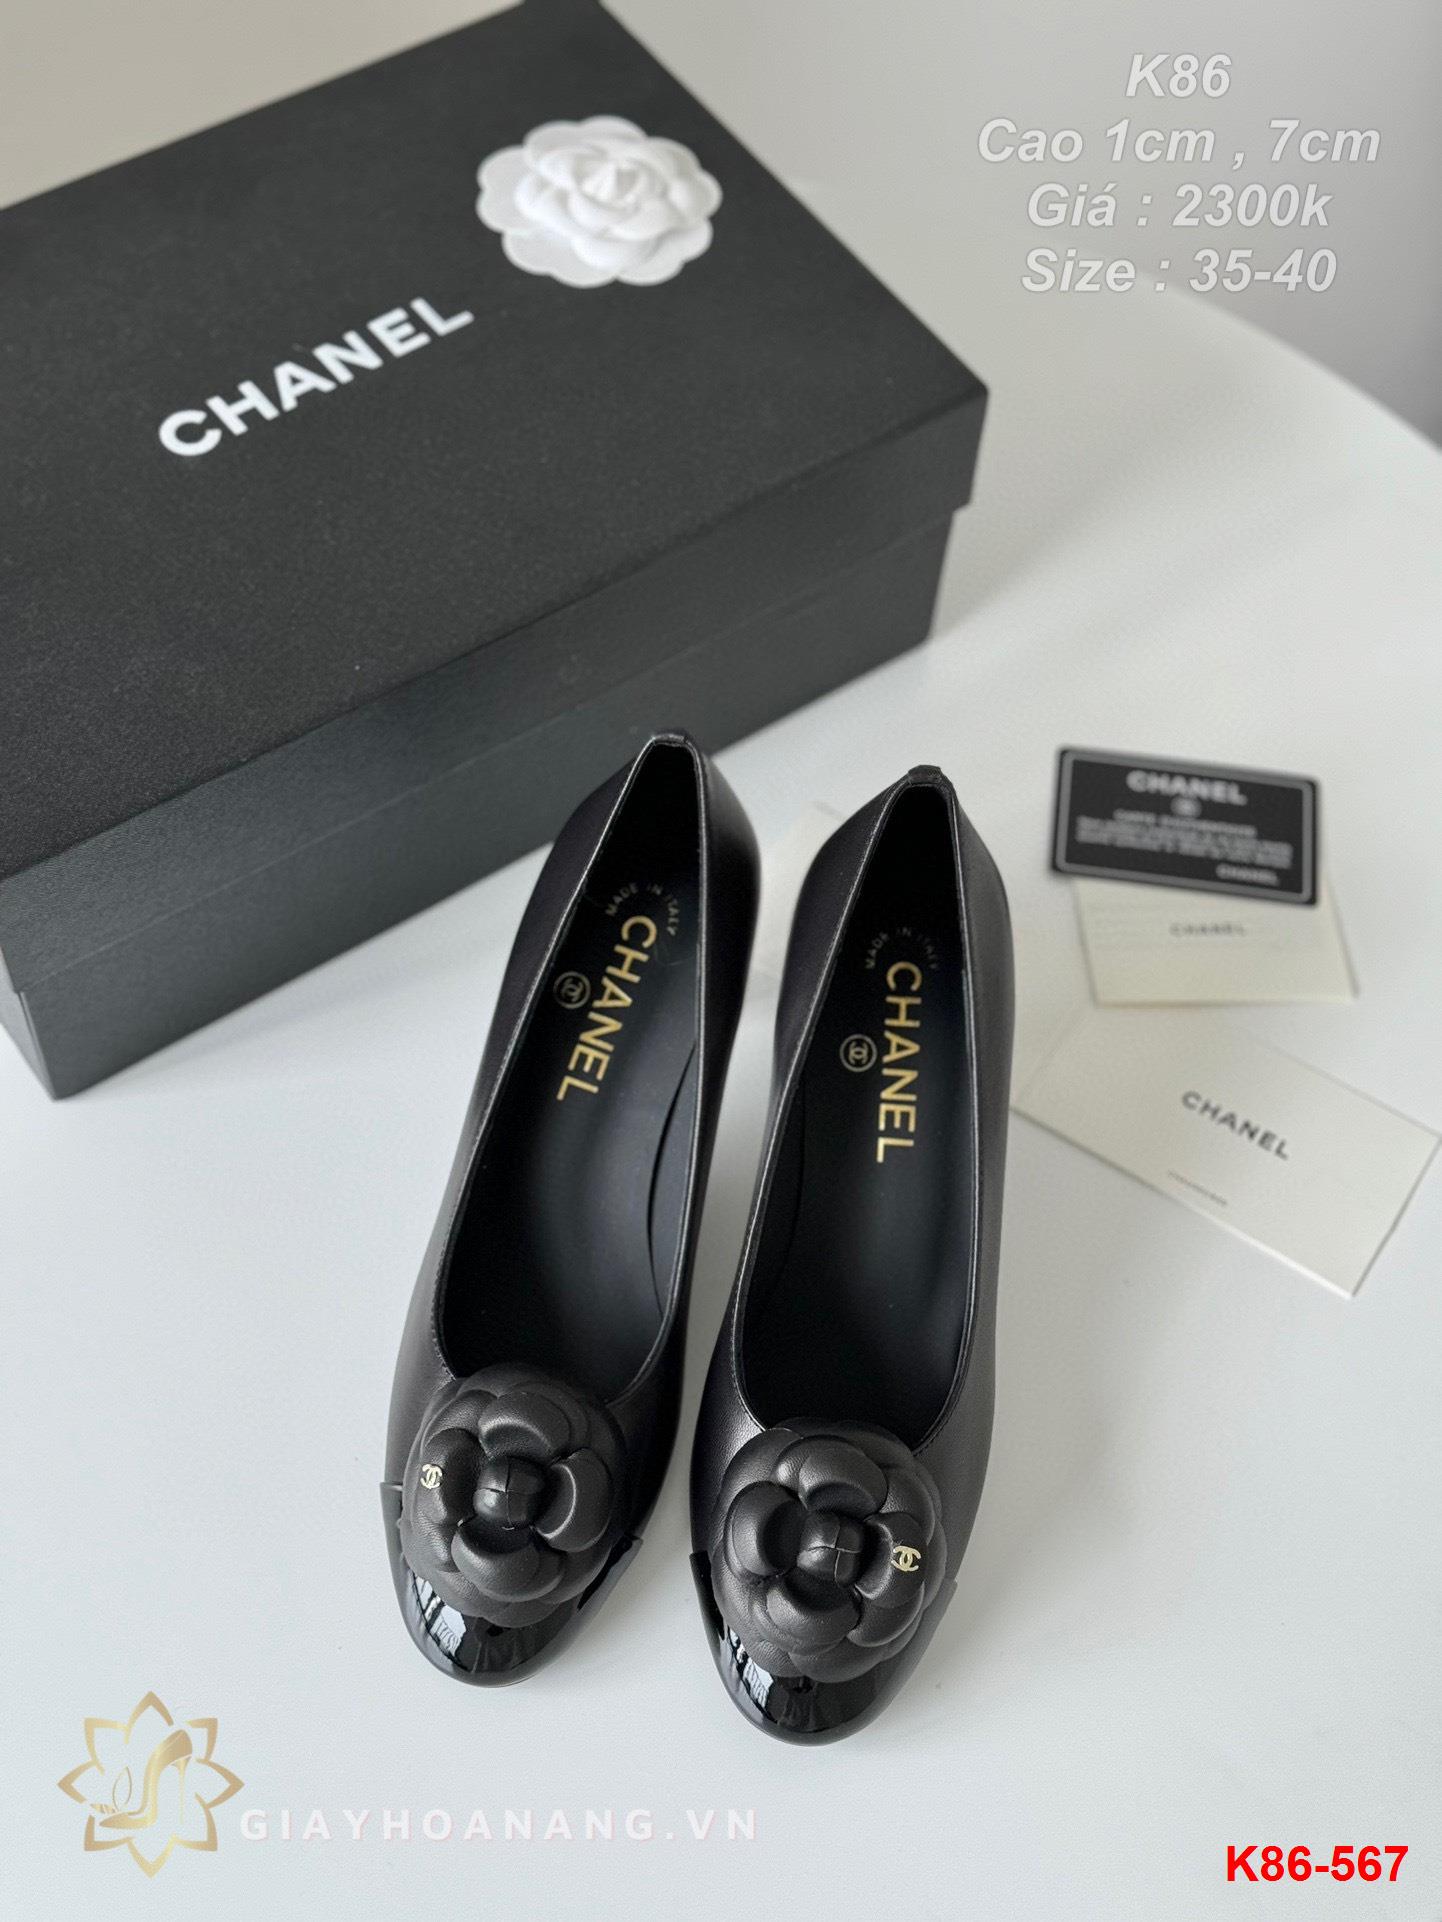 K86-567 Chanel giày cao 1cm , 7cm siêu cấp